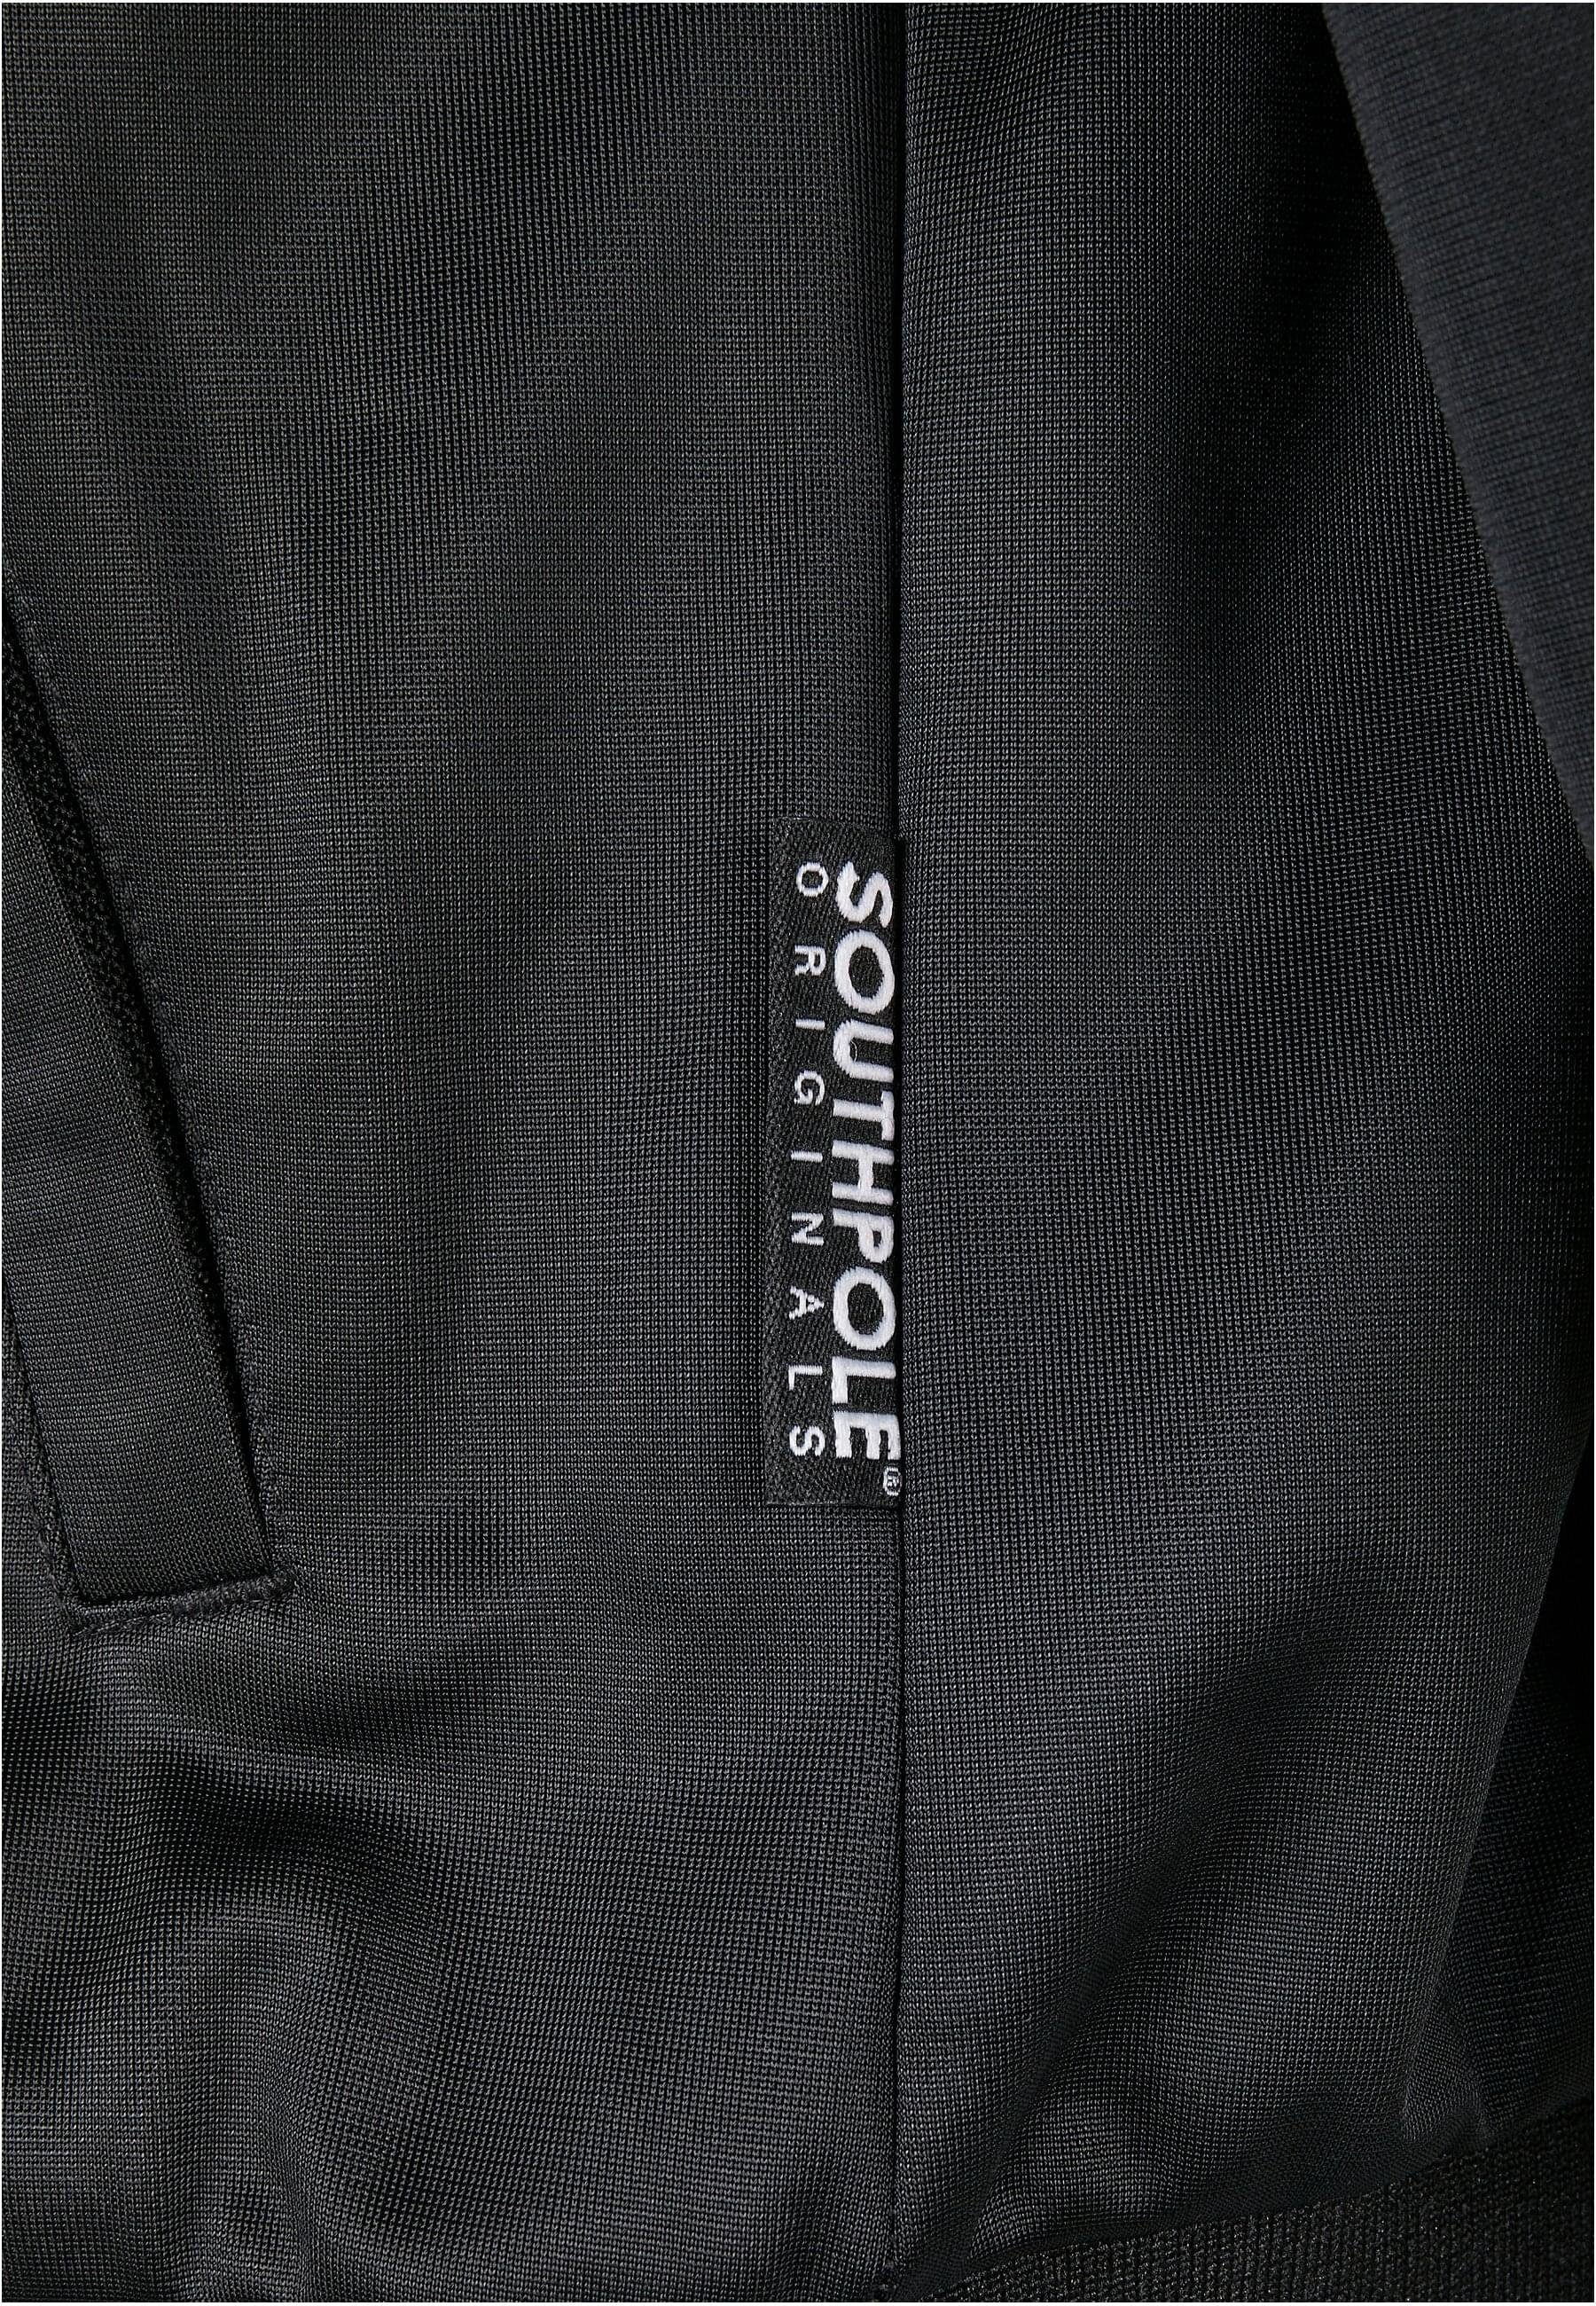 Herren Outdoorjacke Southpole (1-St) Jacket Tricot Southpole black